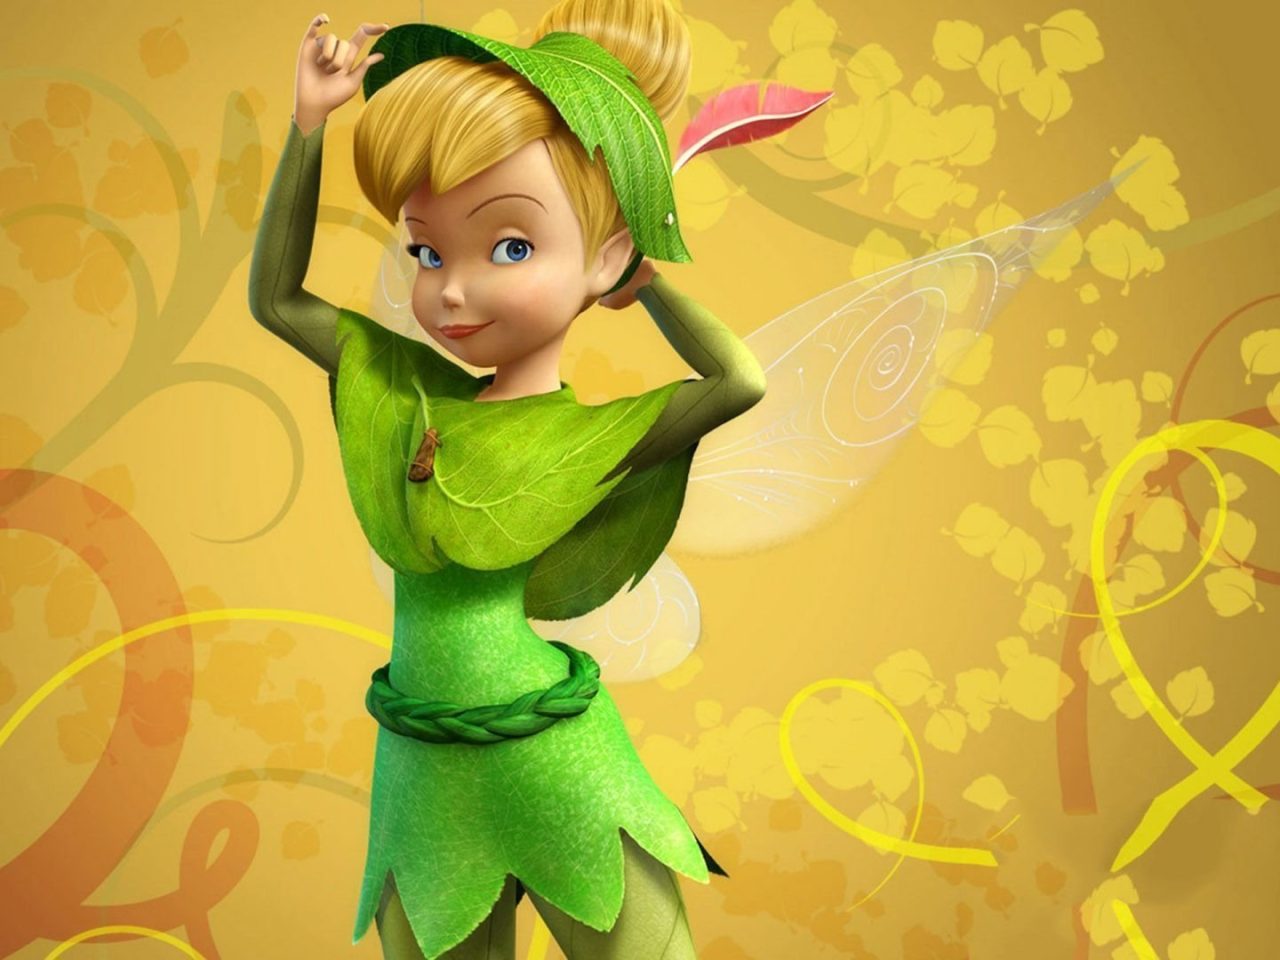 Tinker Bell As Peter Pan Full HD Wallpaper And Background 1920x1080, Wallpaper13.com